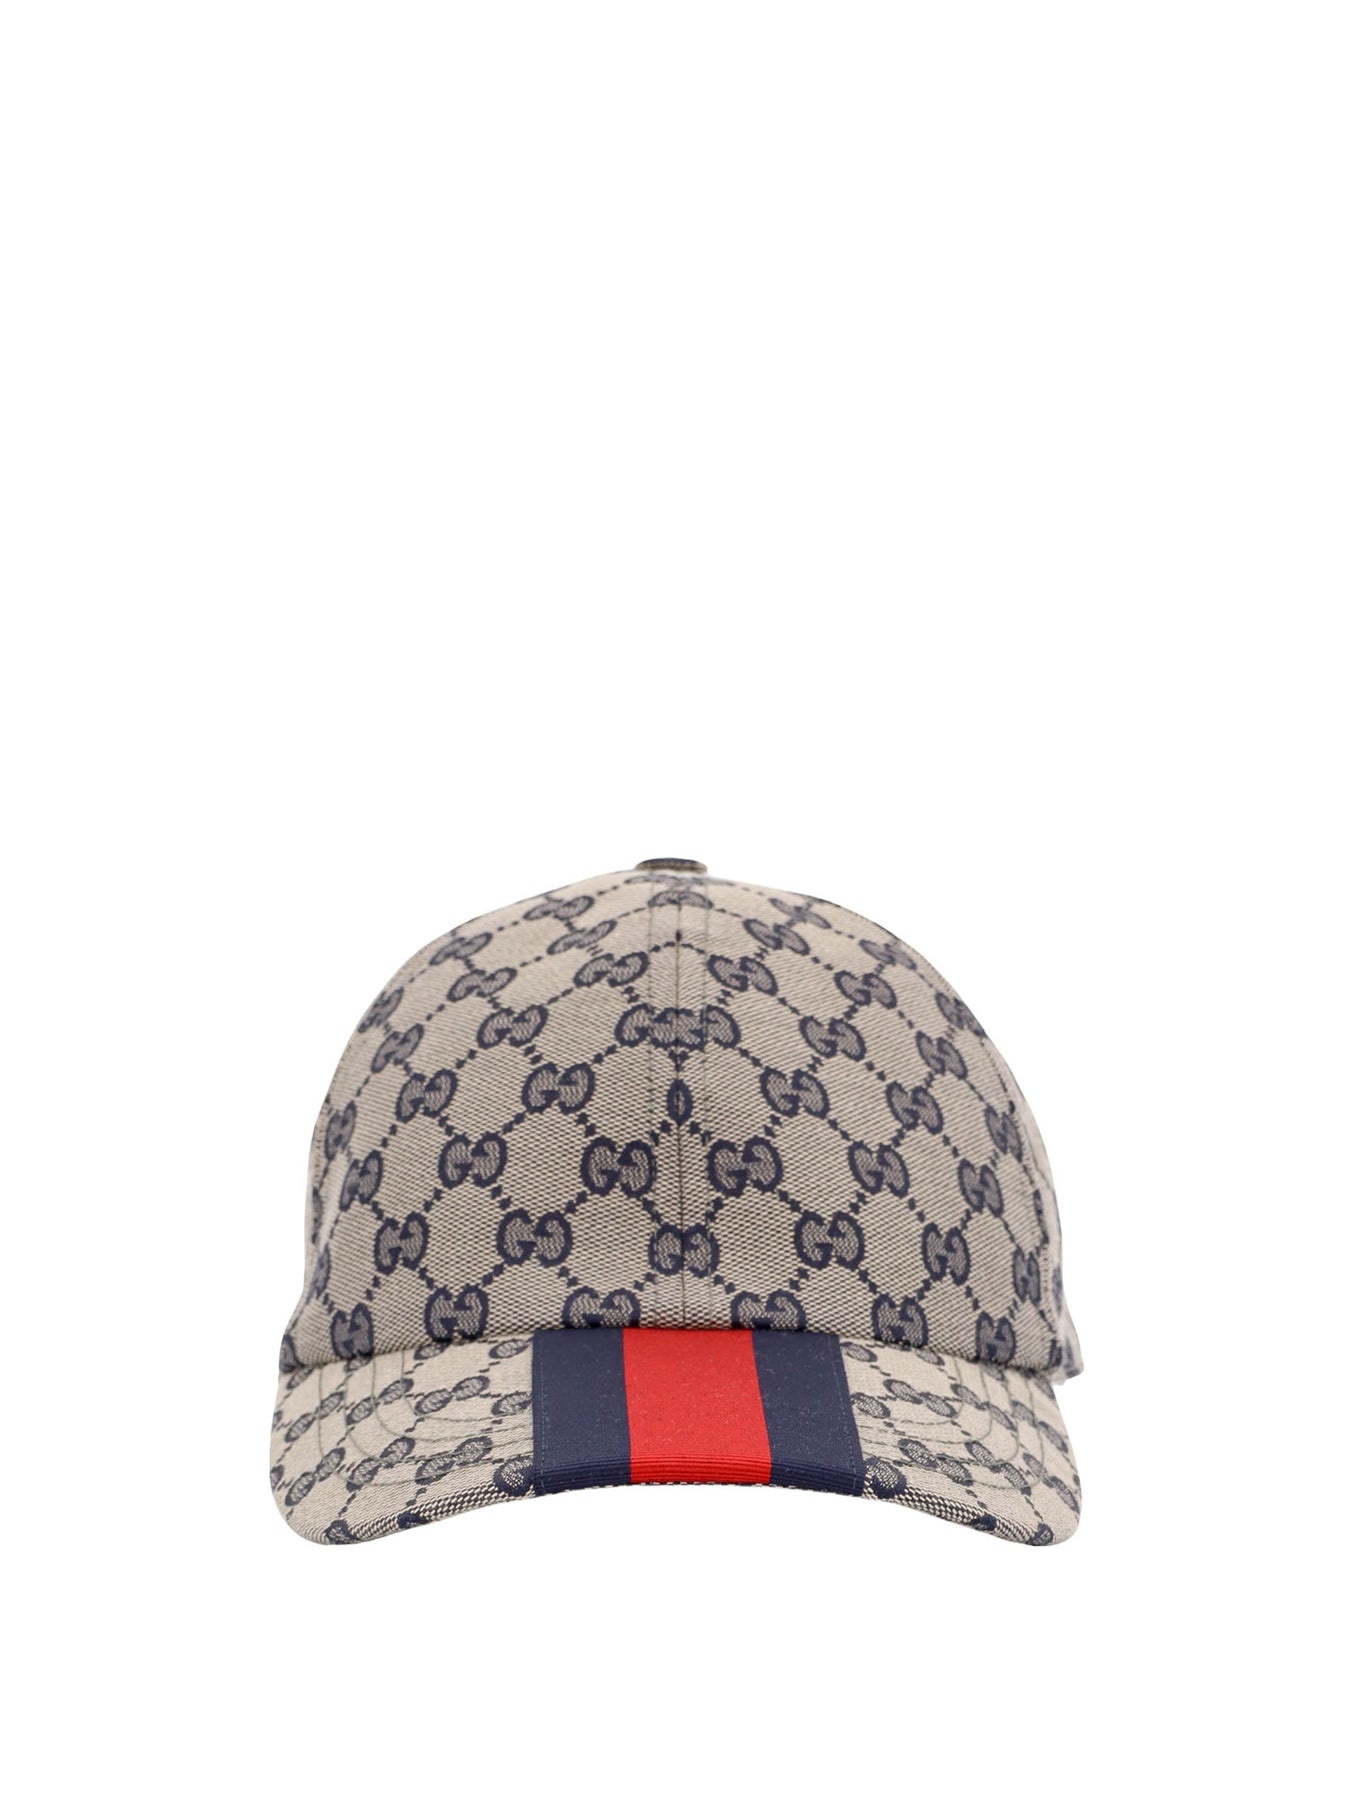 Original GG Fabric hat - 1